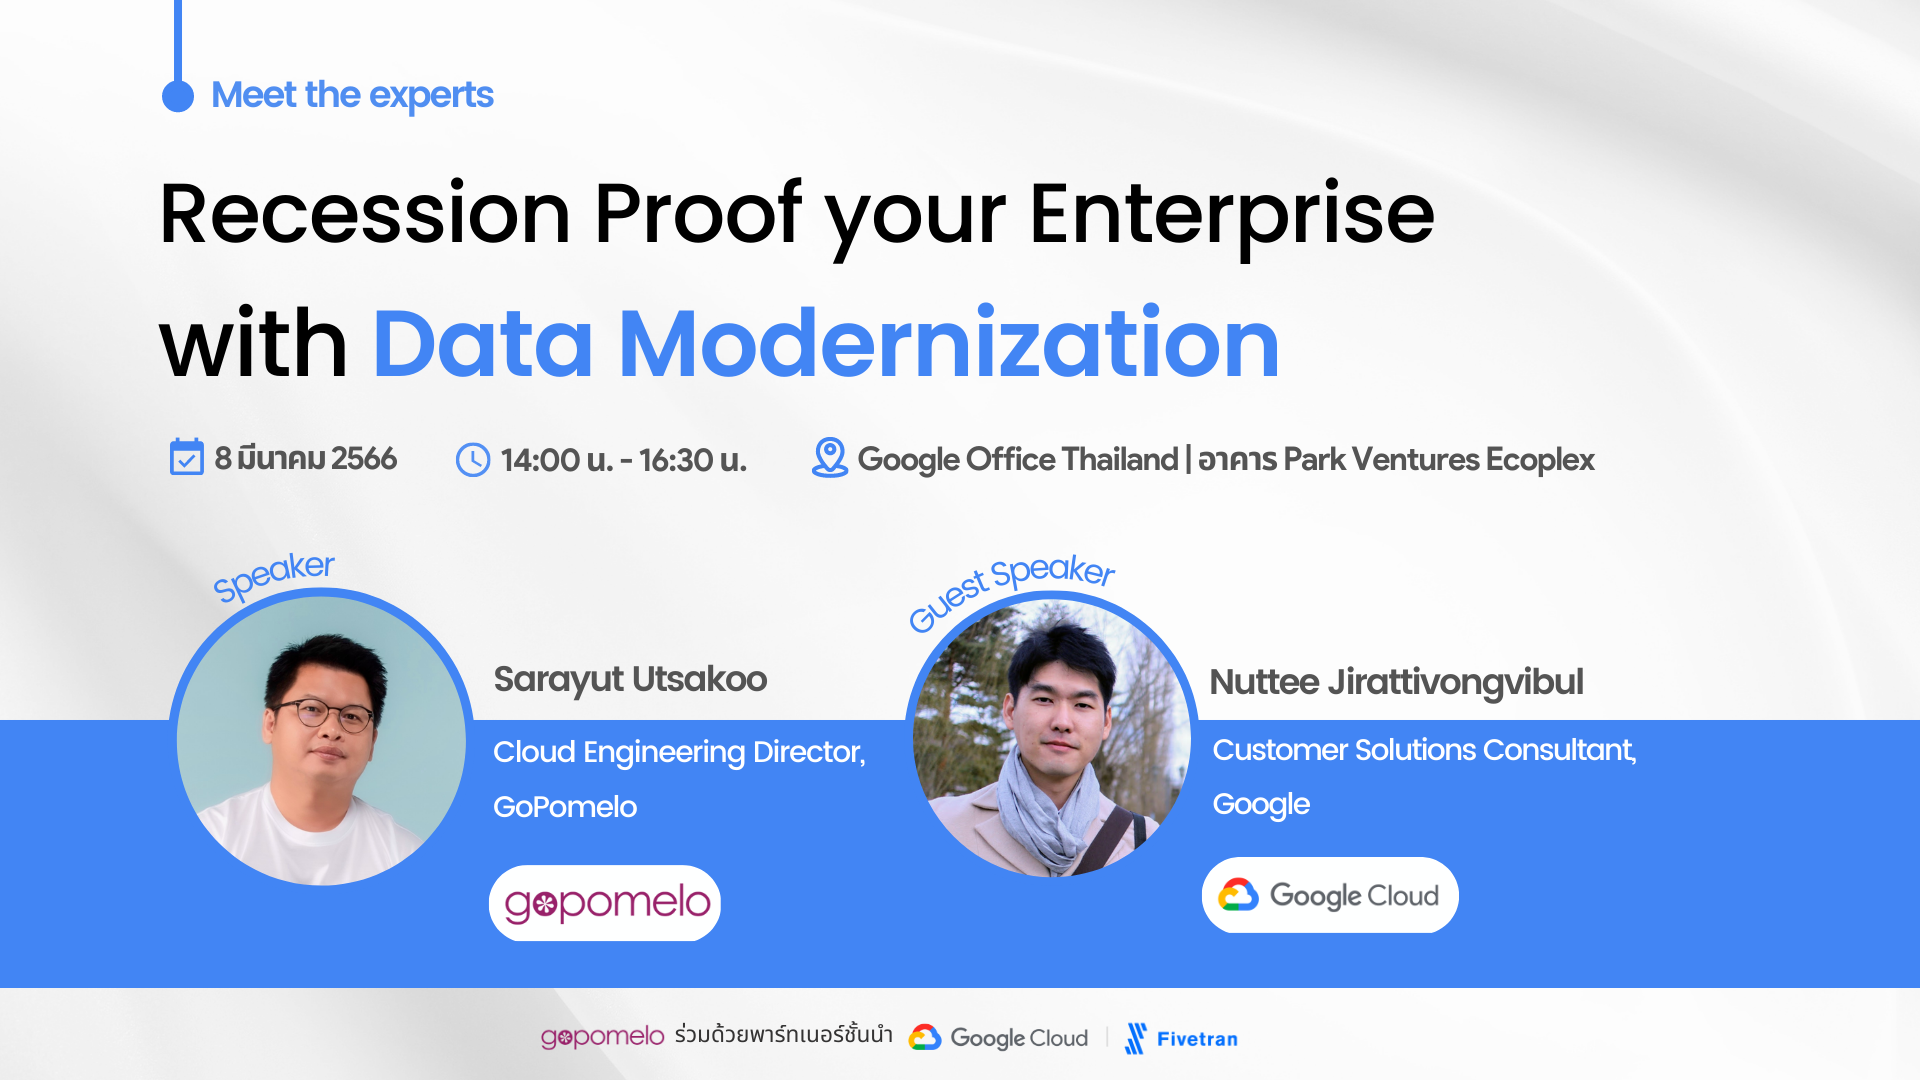 Recession Proof your Enterprise with Data Modernization